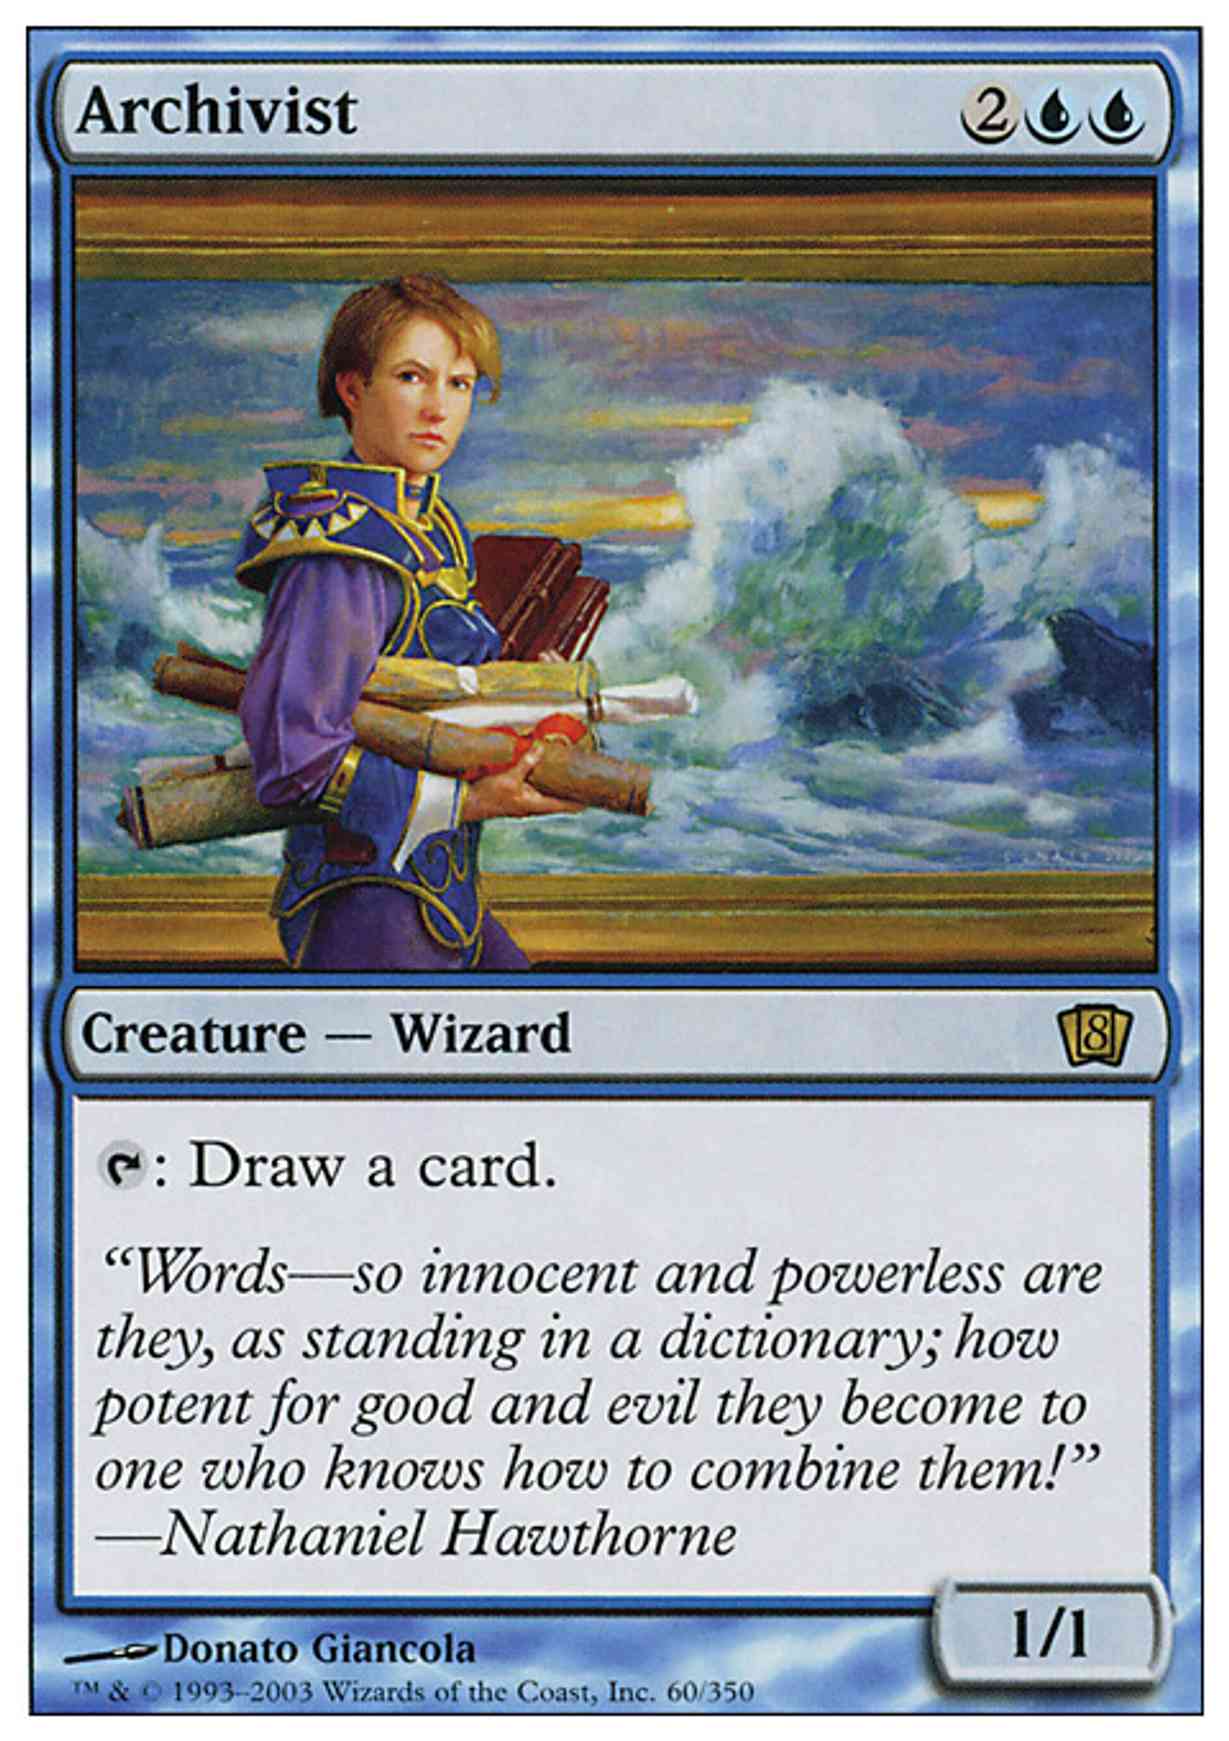 Archivist magic card front